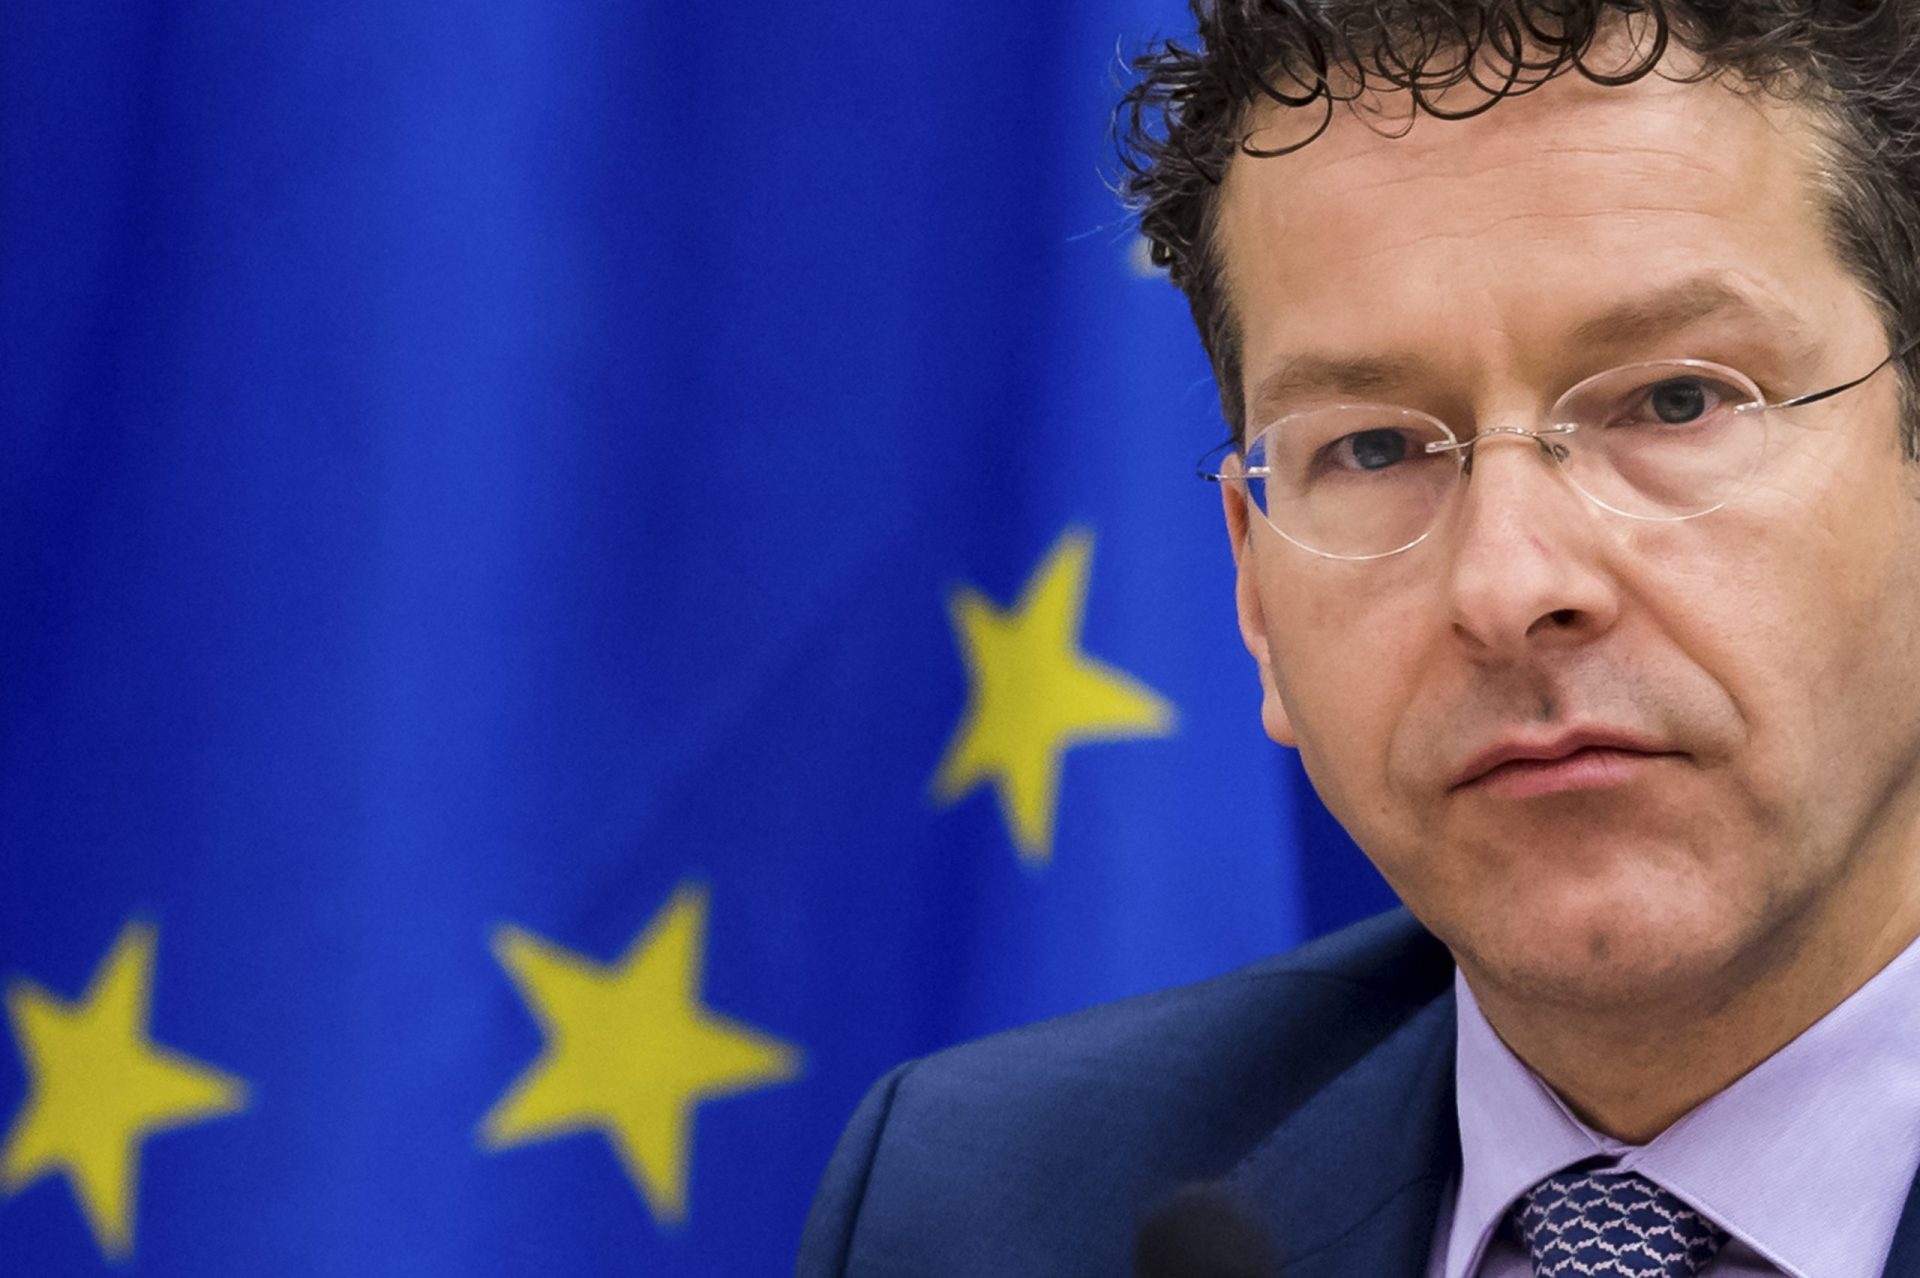 Eurogrupo vai prosseguir sem Grécia e discutir &#8216;consequências&#8217;, diz Dijsselbloem